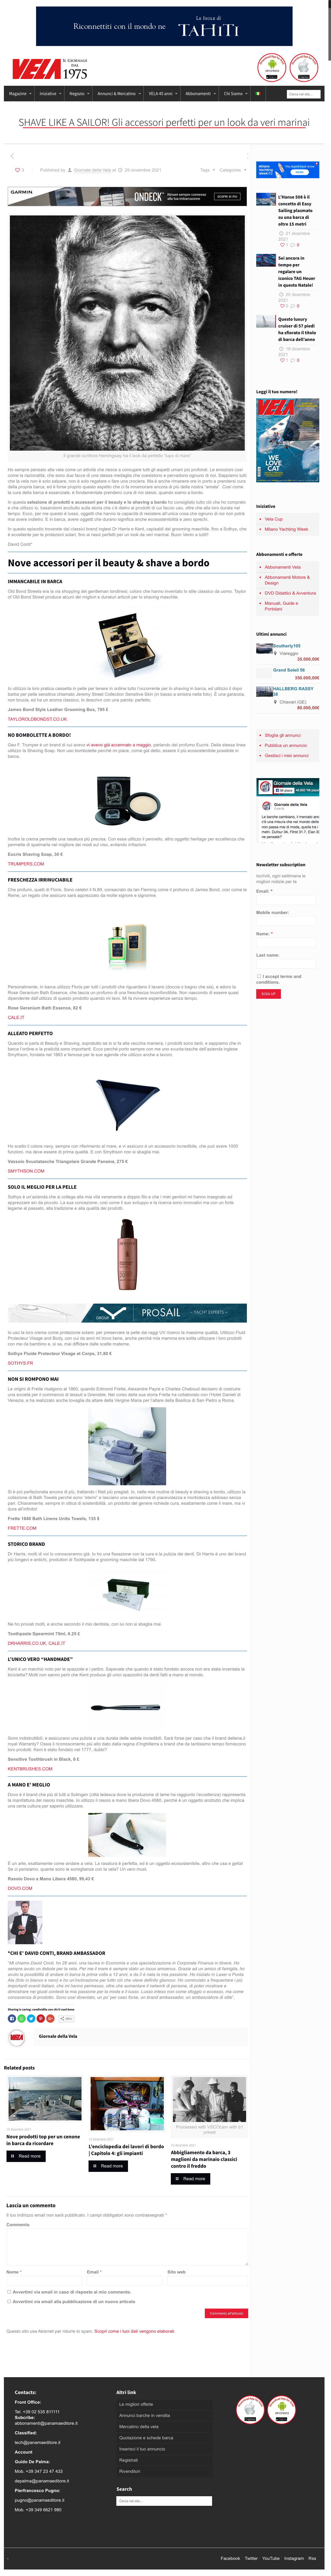 uppermagazine online figue nicolai officina parfum